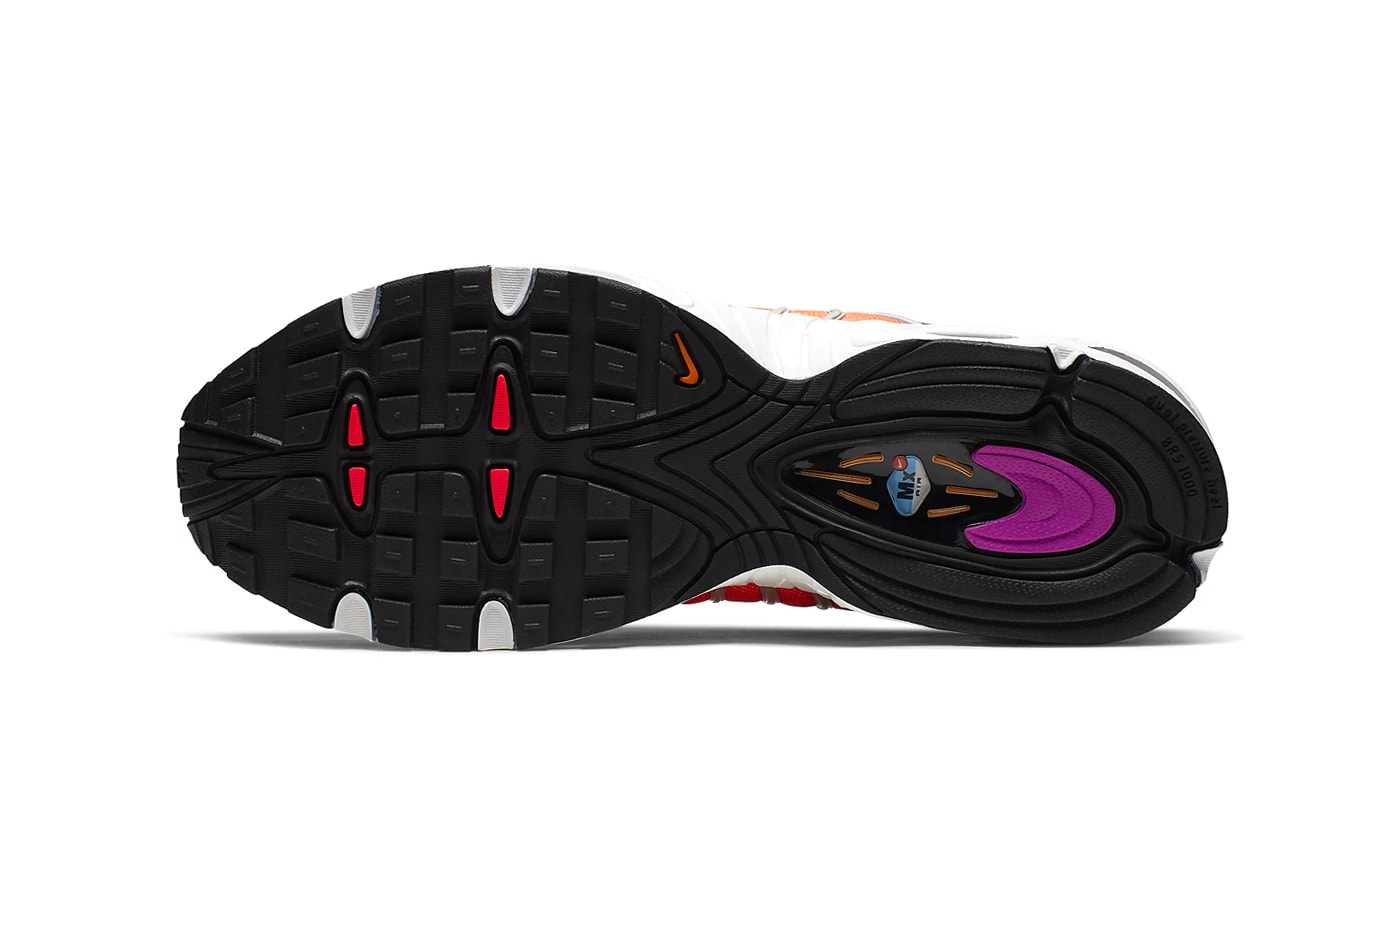 Nike Air Max Tailwind IV 4 Black Bright Crimson Bright Ceramic  release info price date AQ2567-002 nike.com webstore stockist buy now 